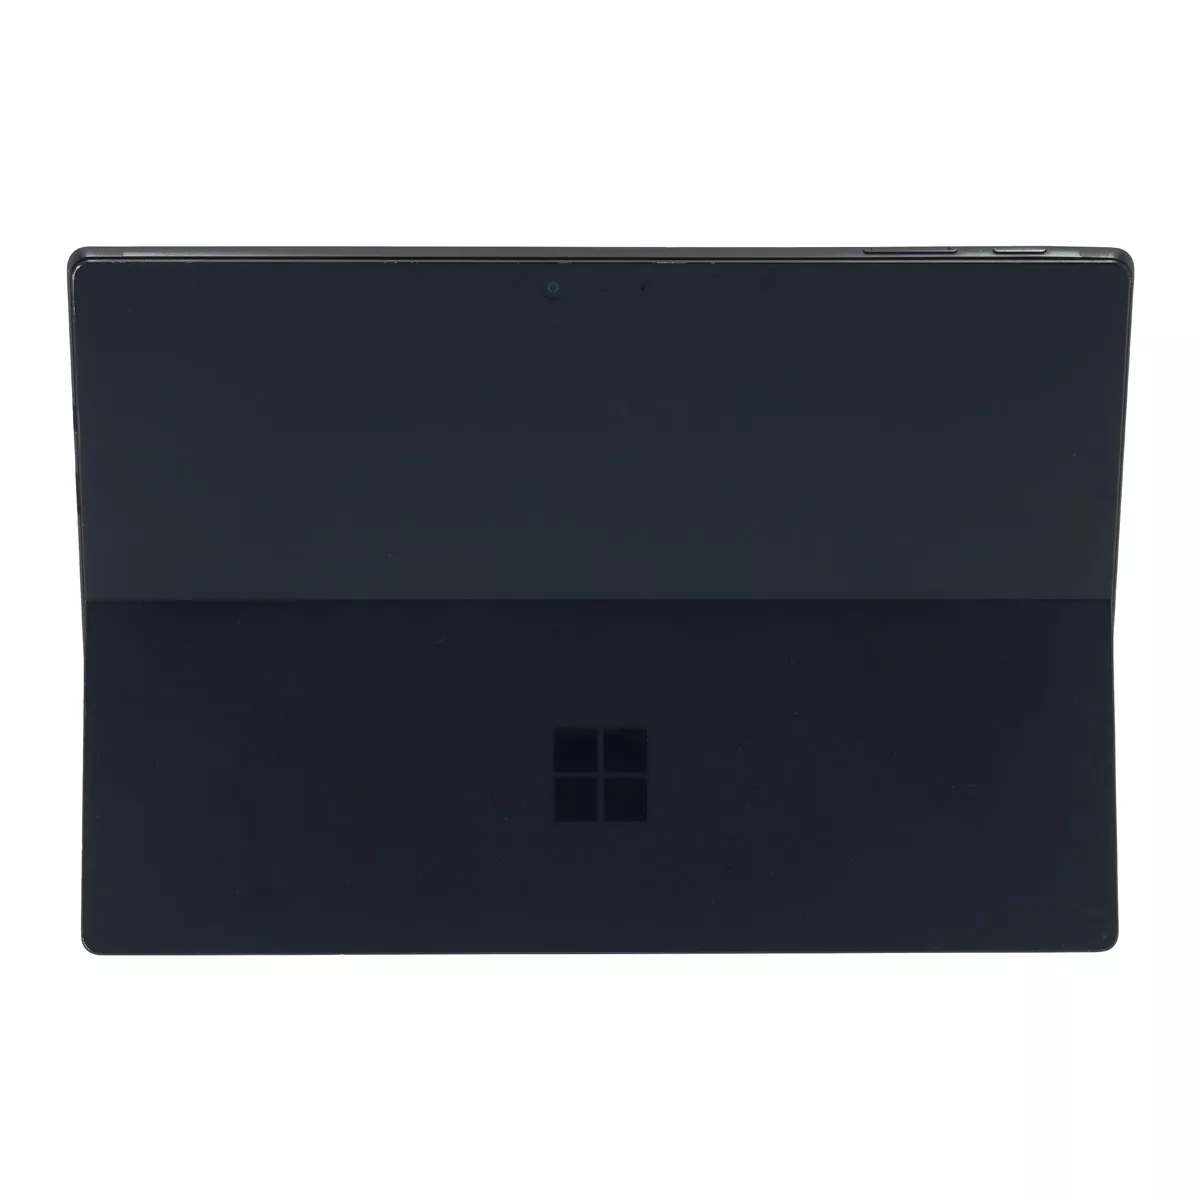 Microsoft Surface Pro 6 Core i5 8350U 8 GB 240 GB SSD Webcam Black A